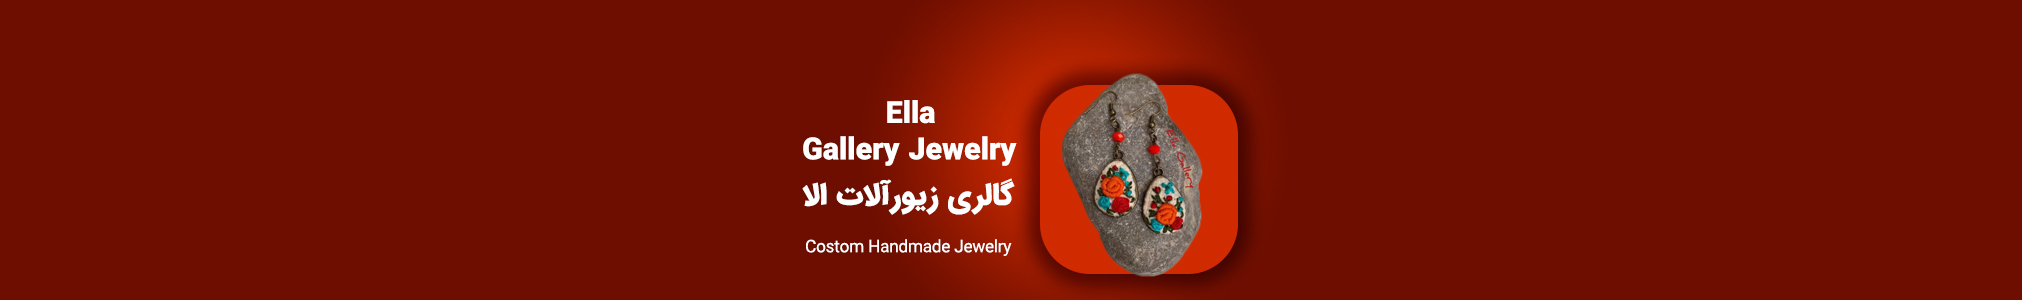 Ella Gallery Jewelry